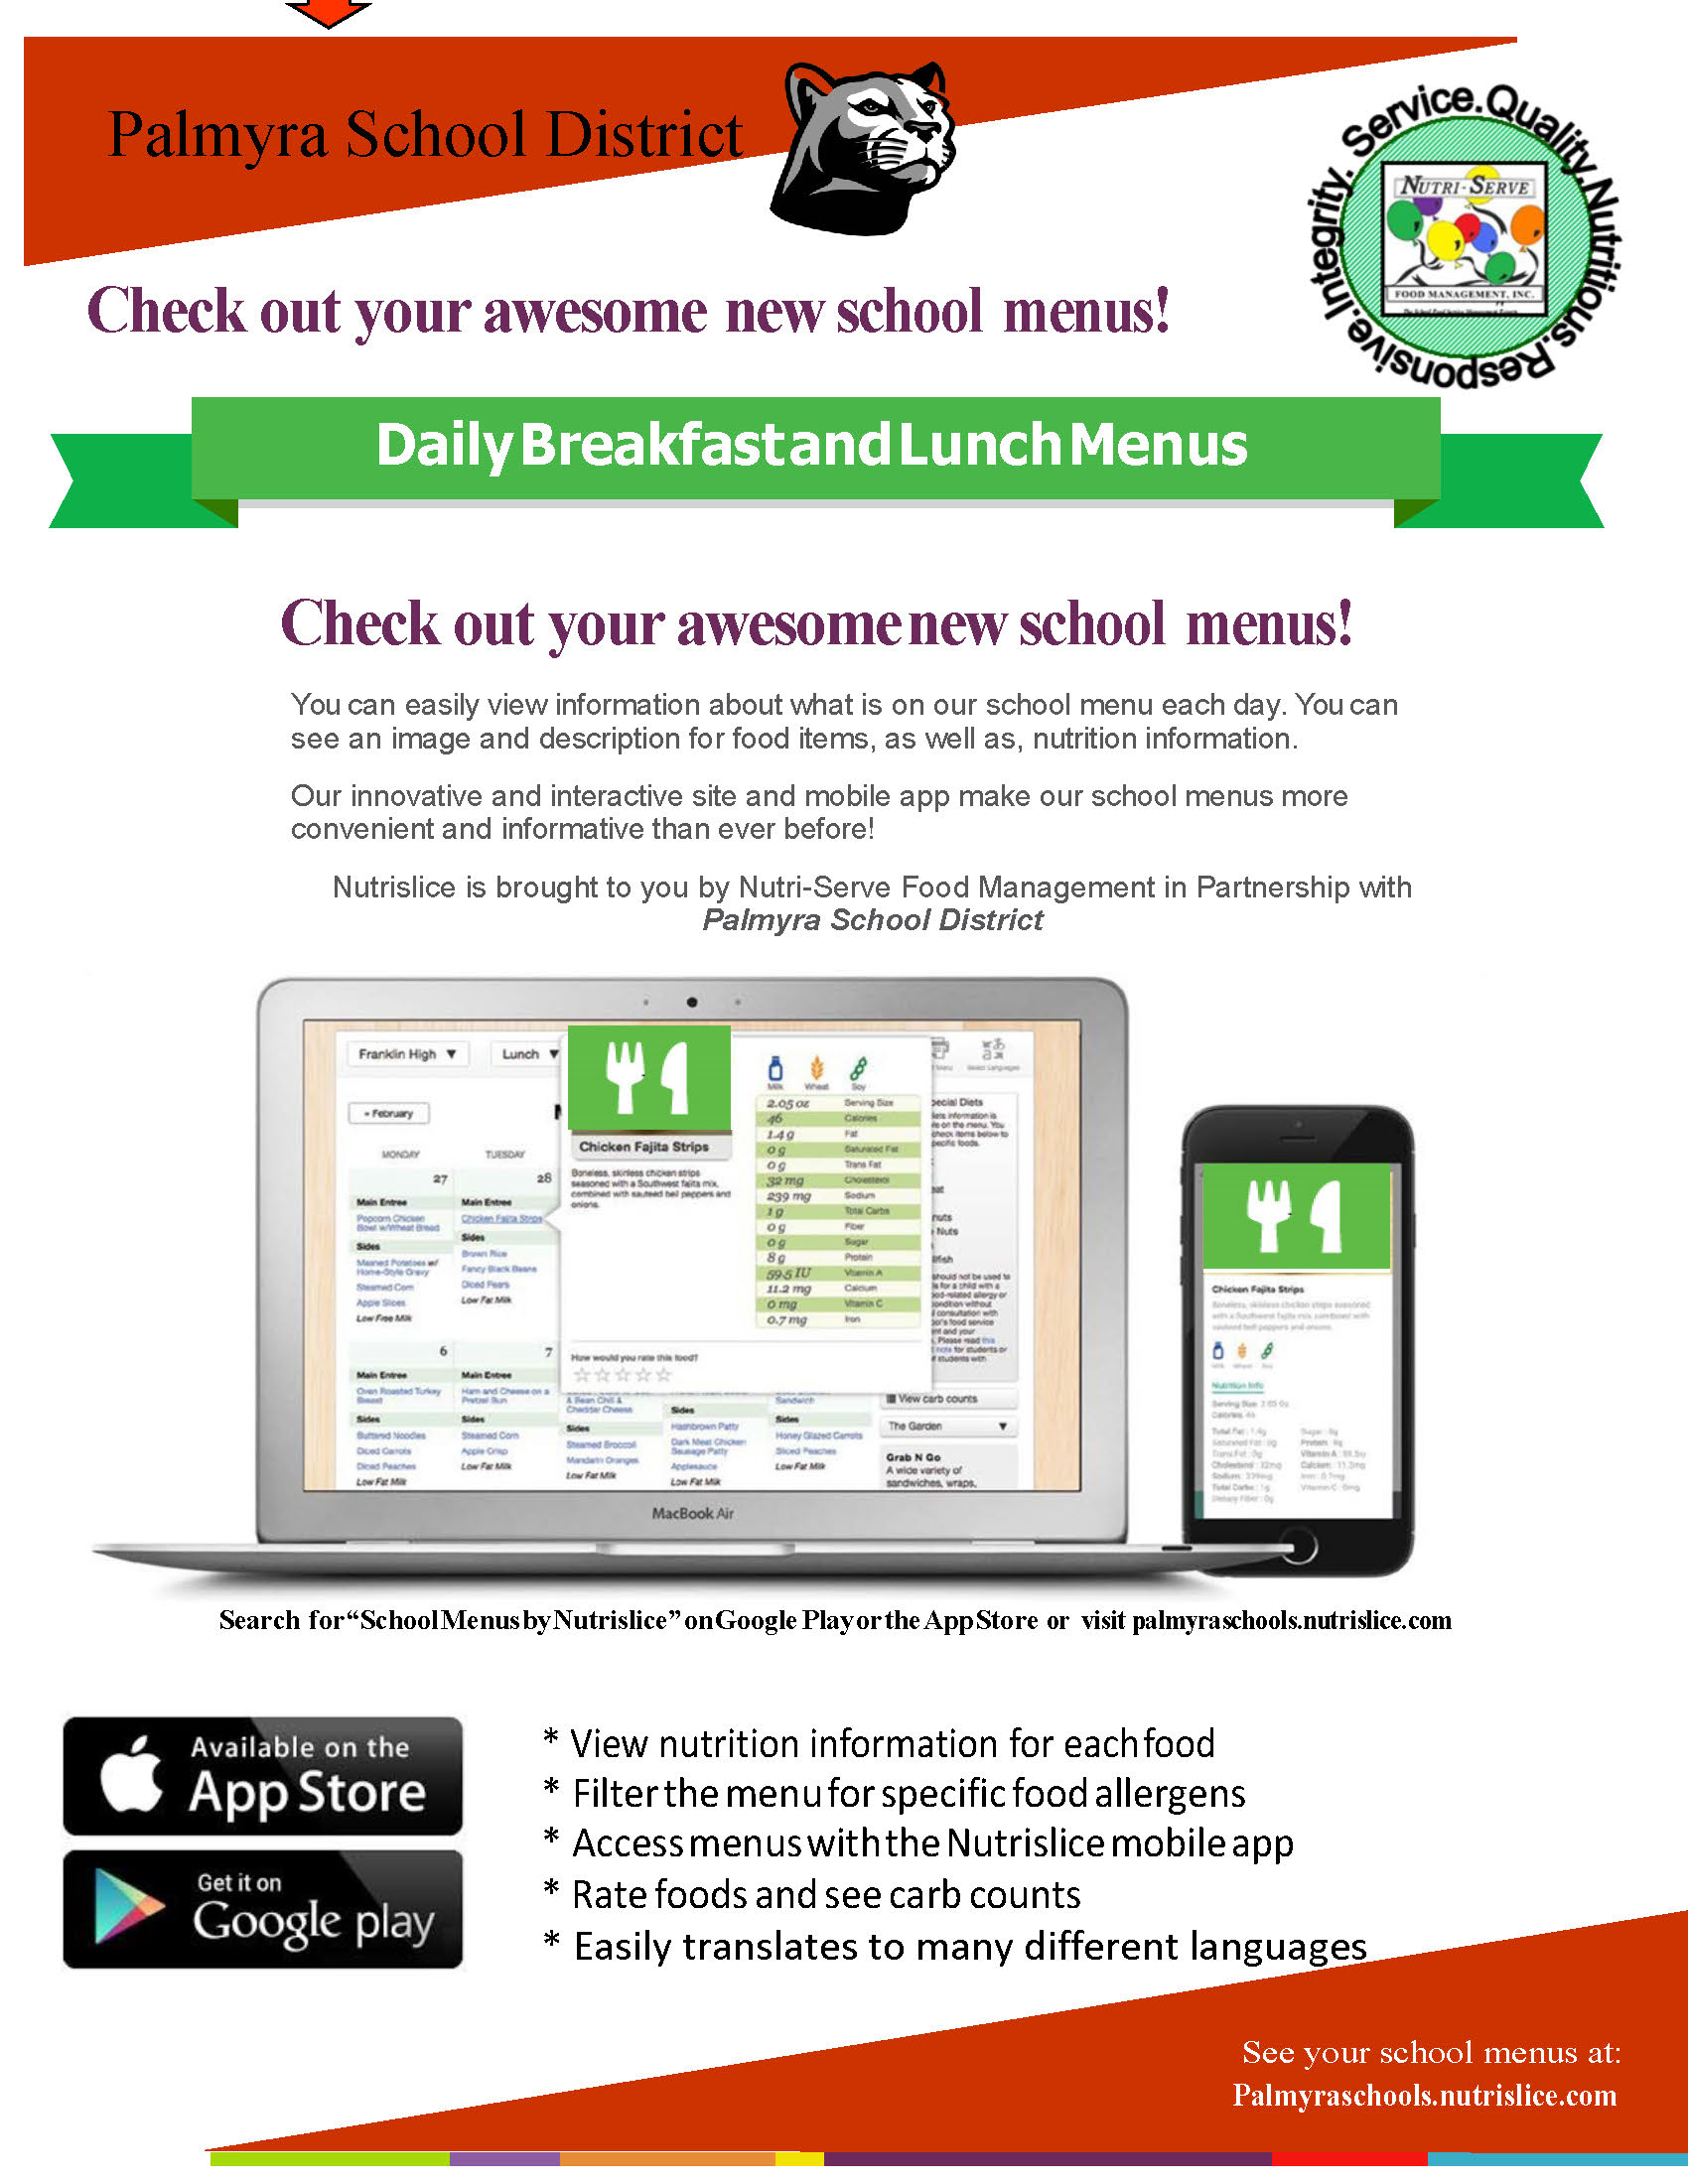 Nutrislice menu app for palmyra school district